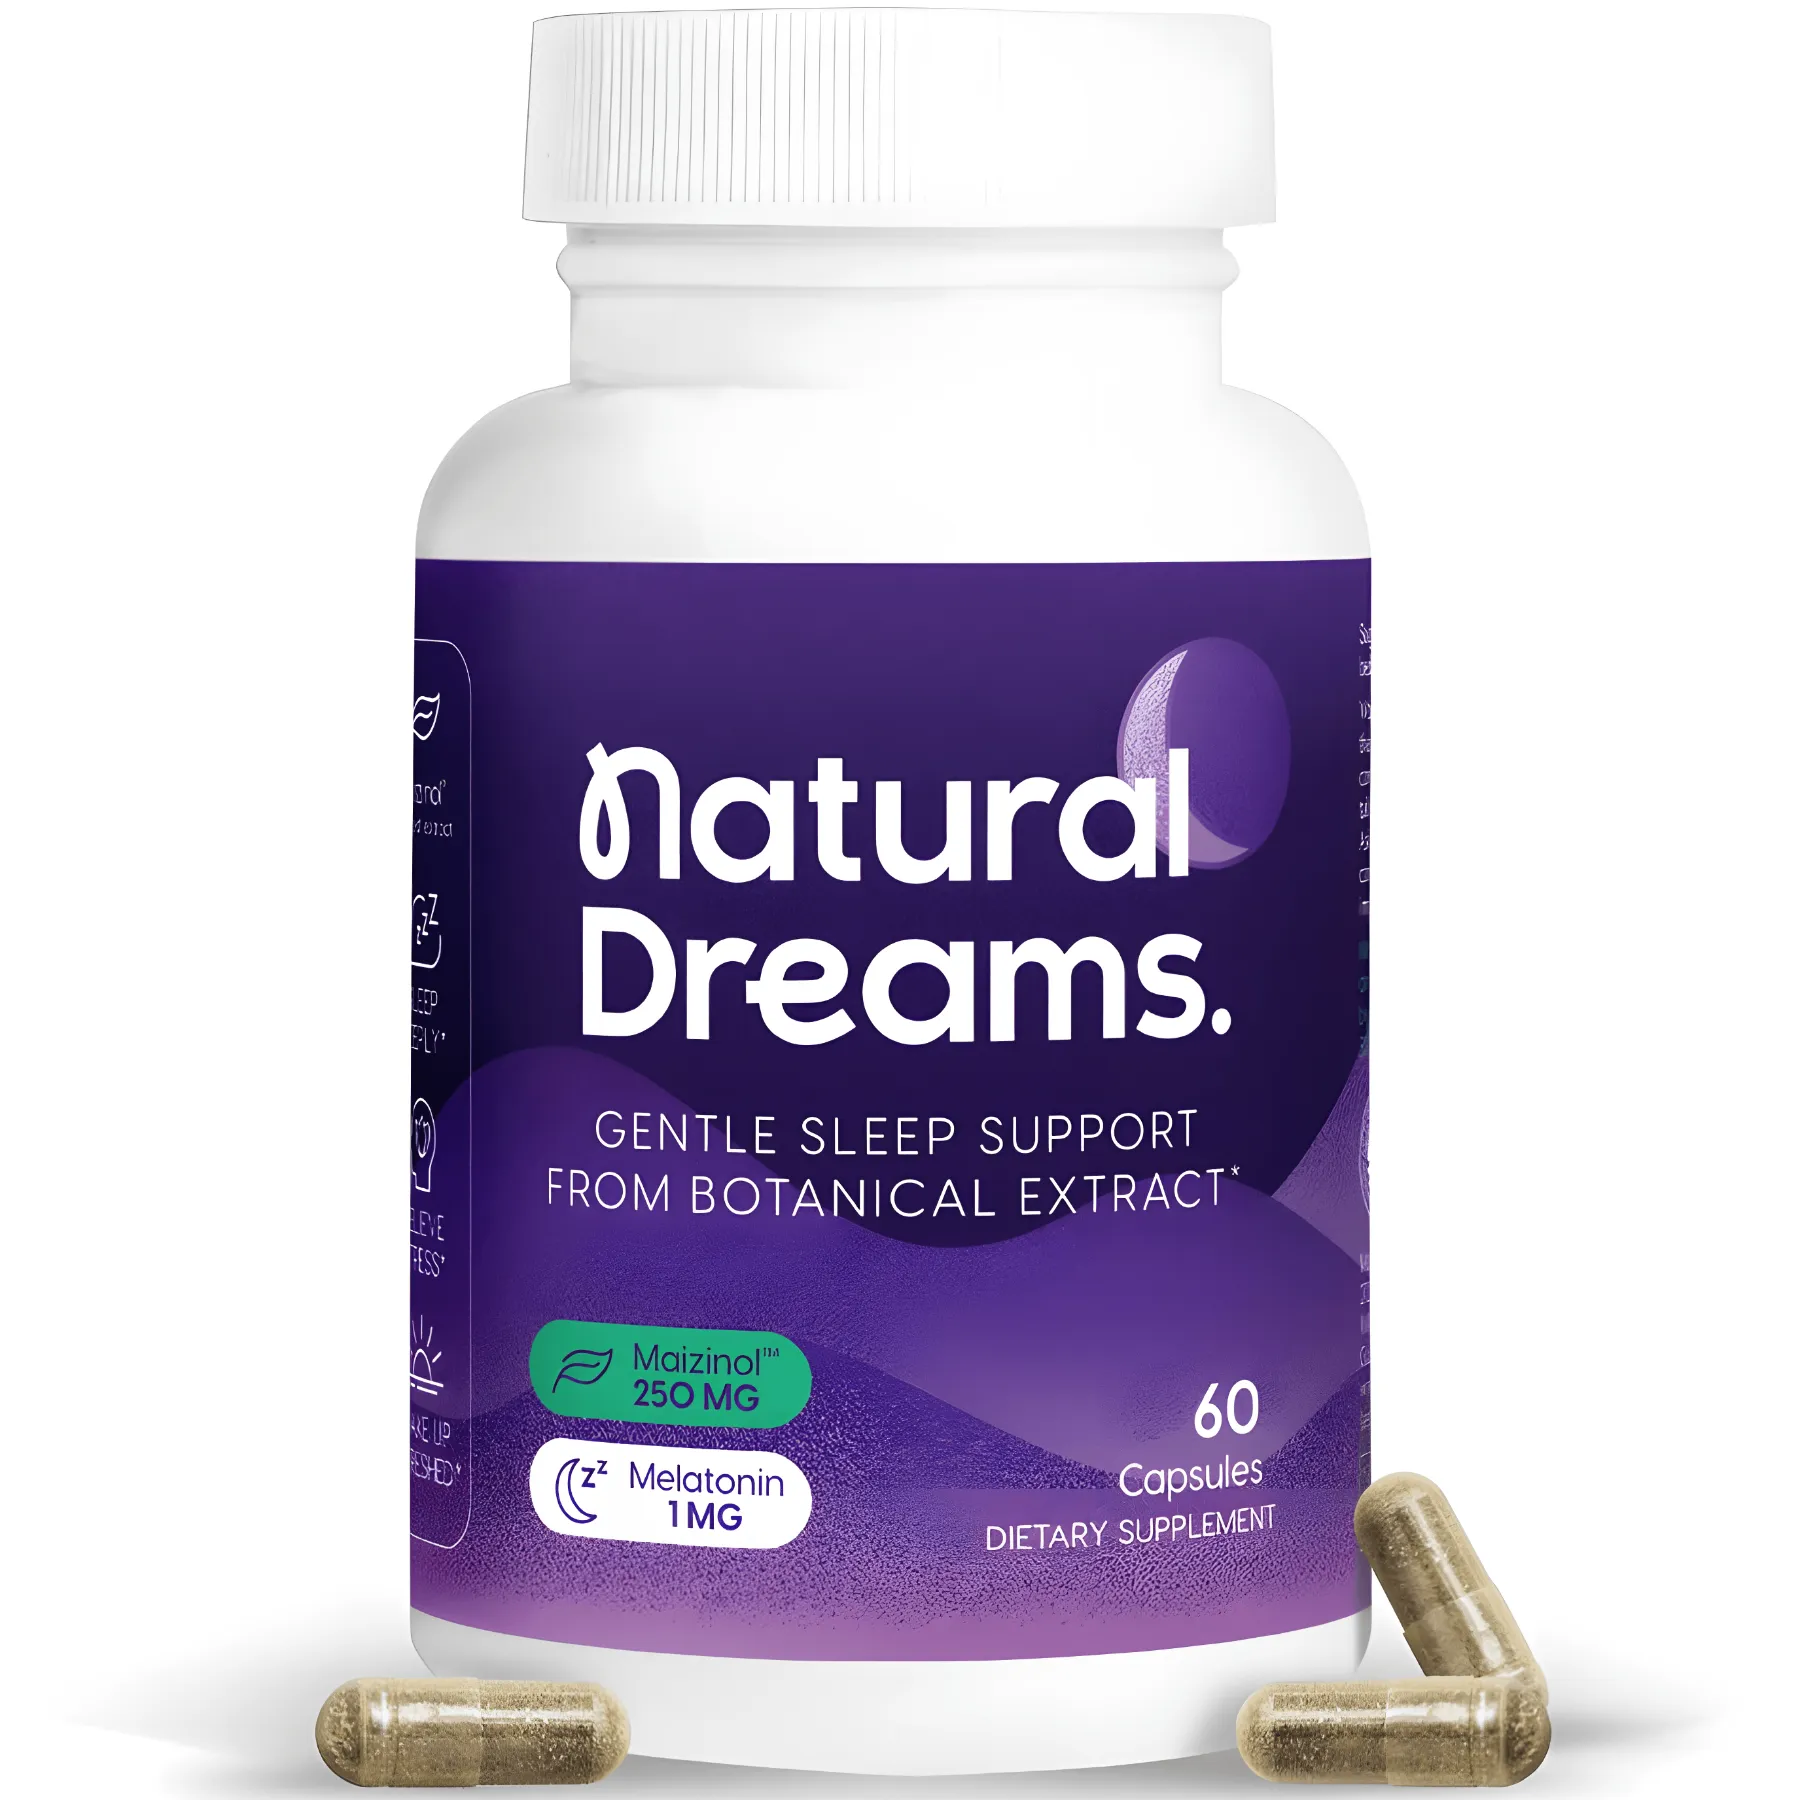 Free Natural Dreams Sleep Improvement Pills